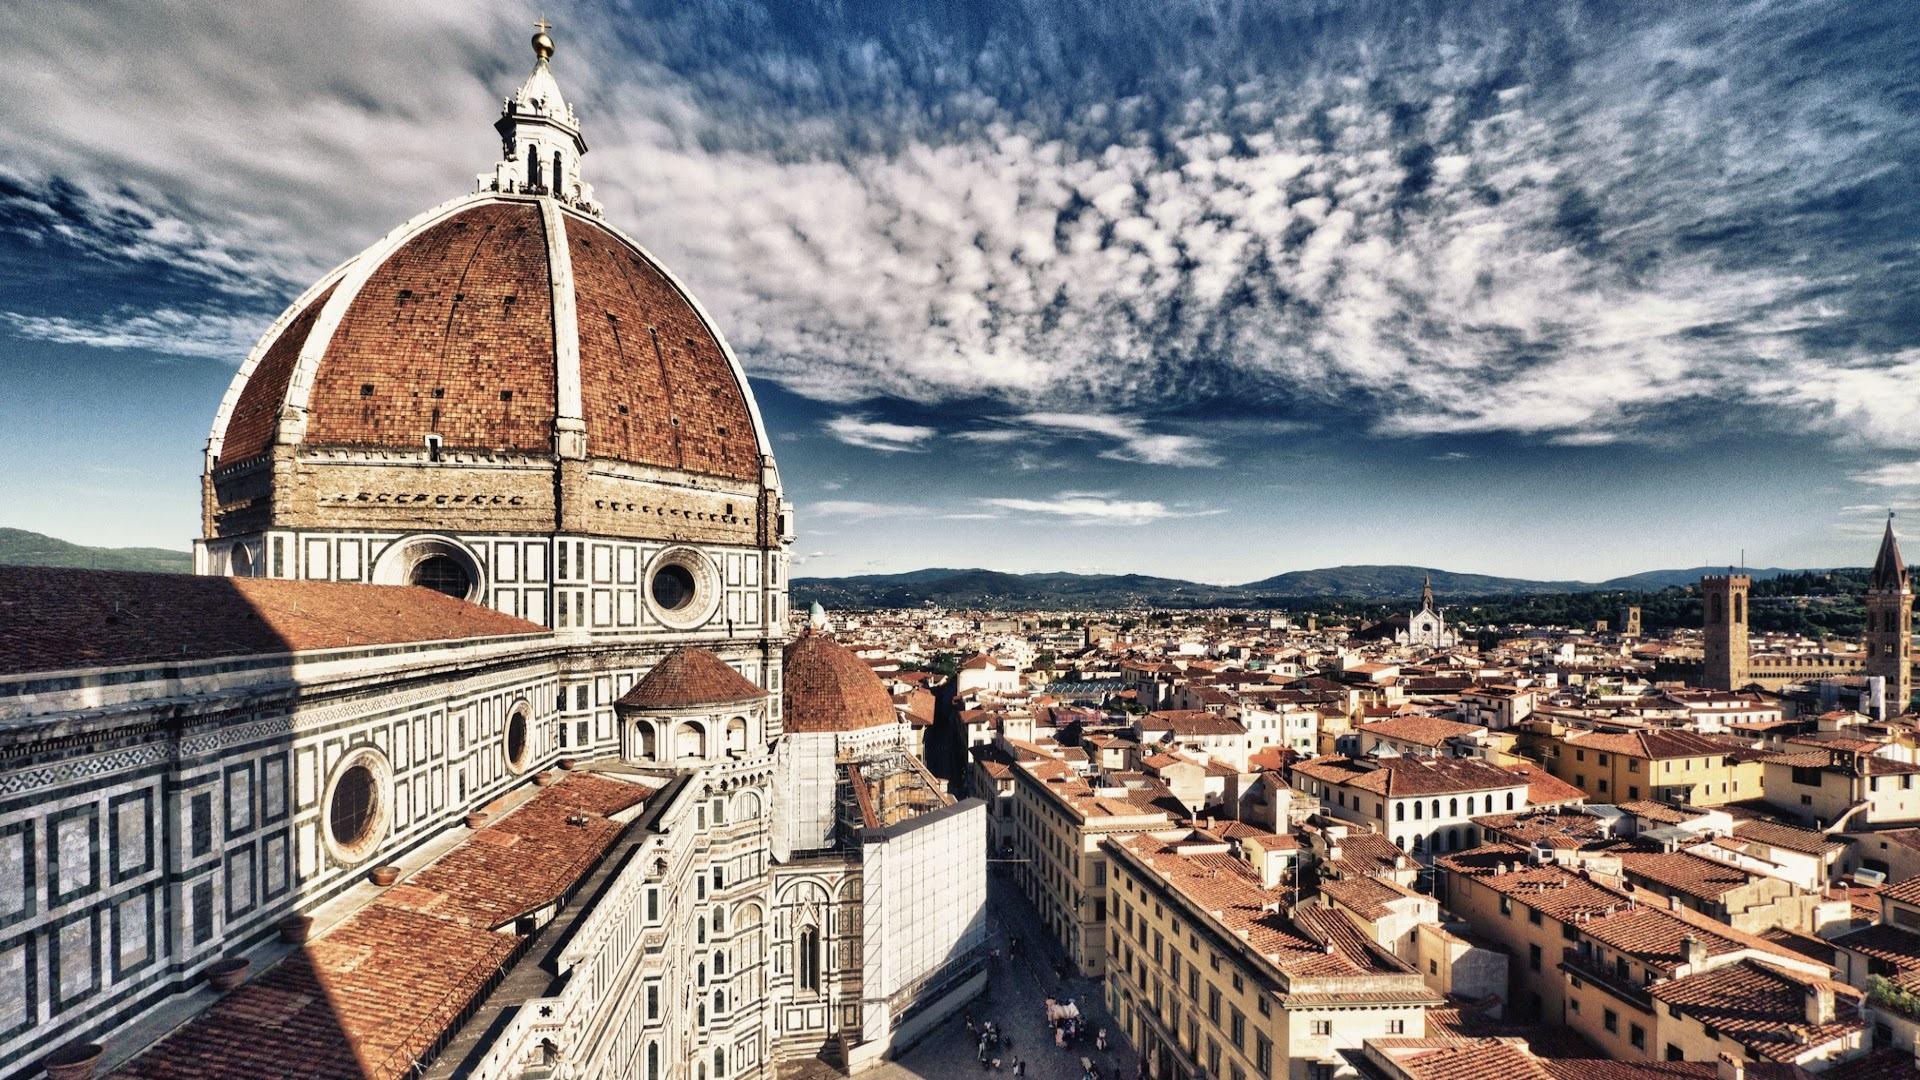 Florence Pics. Beautiful image HD Picture & Desktop Wallpaper